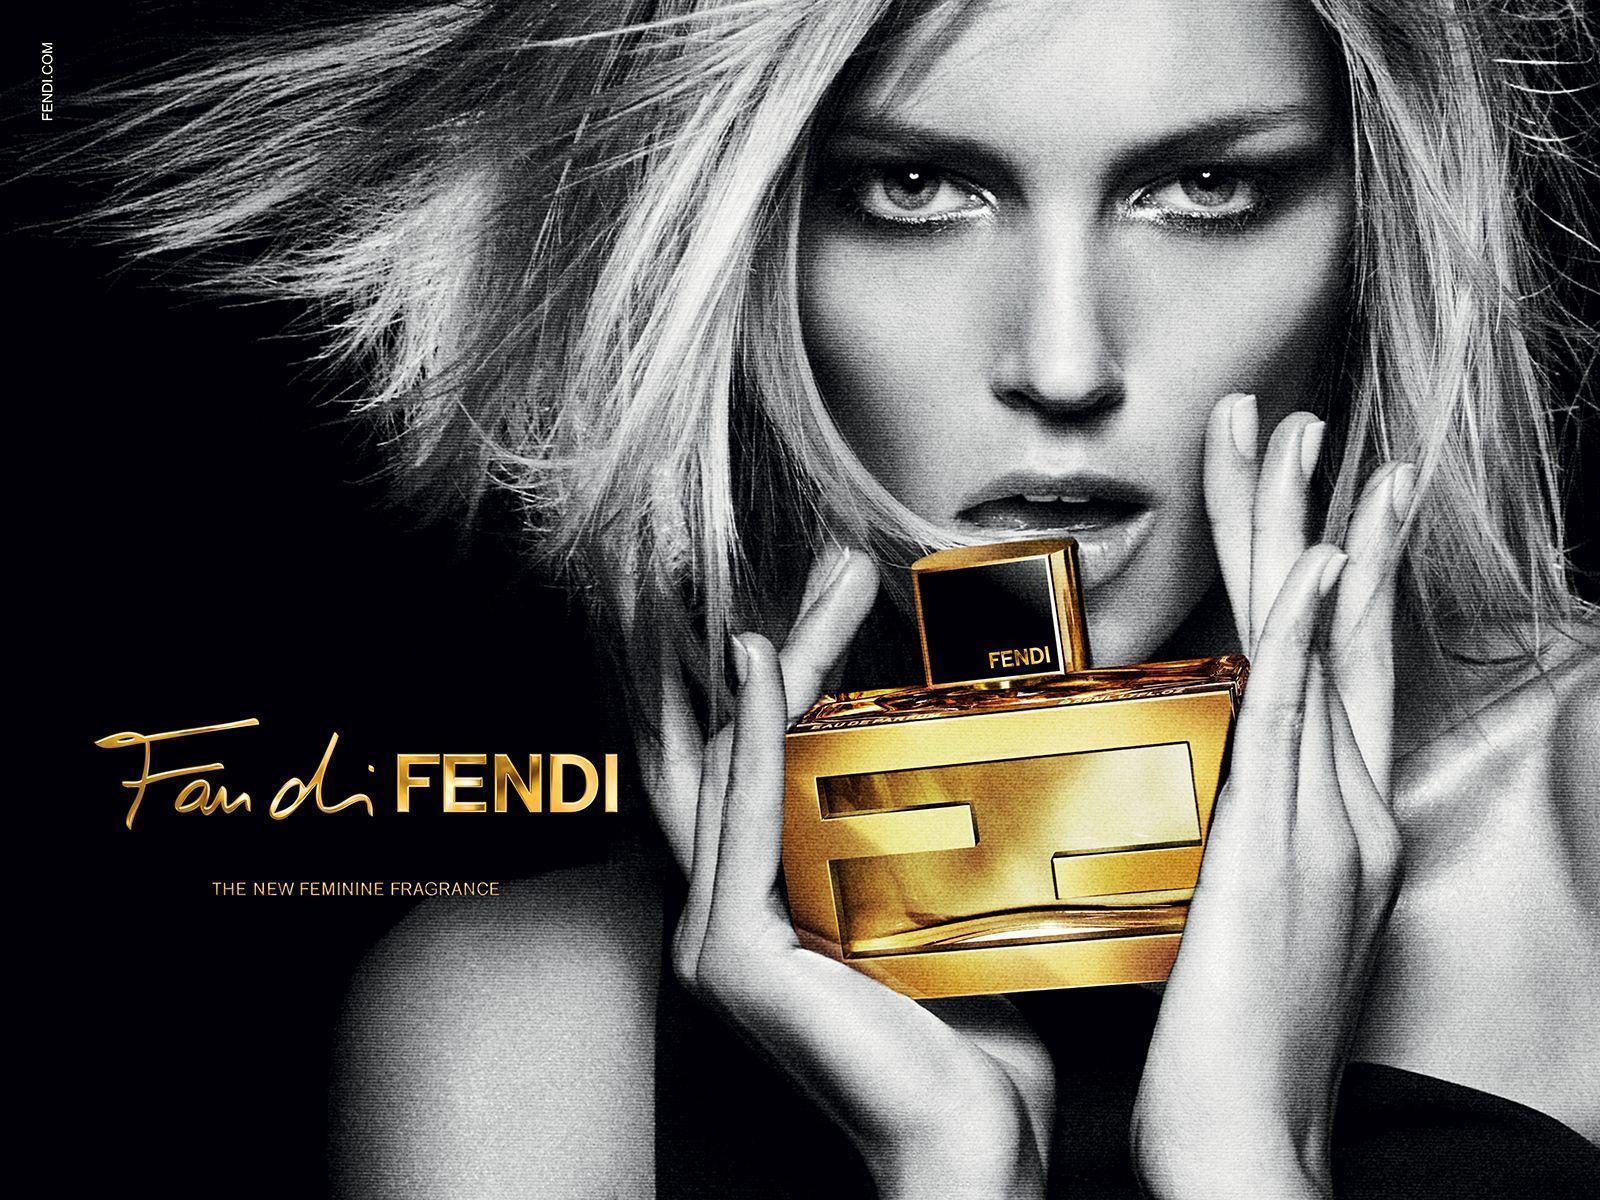 Fendi Women's Fragrances wallpaper and image